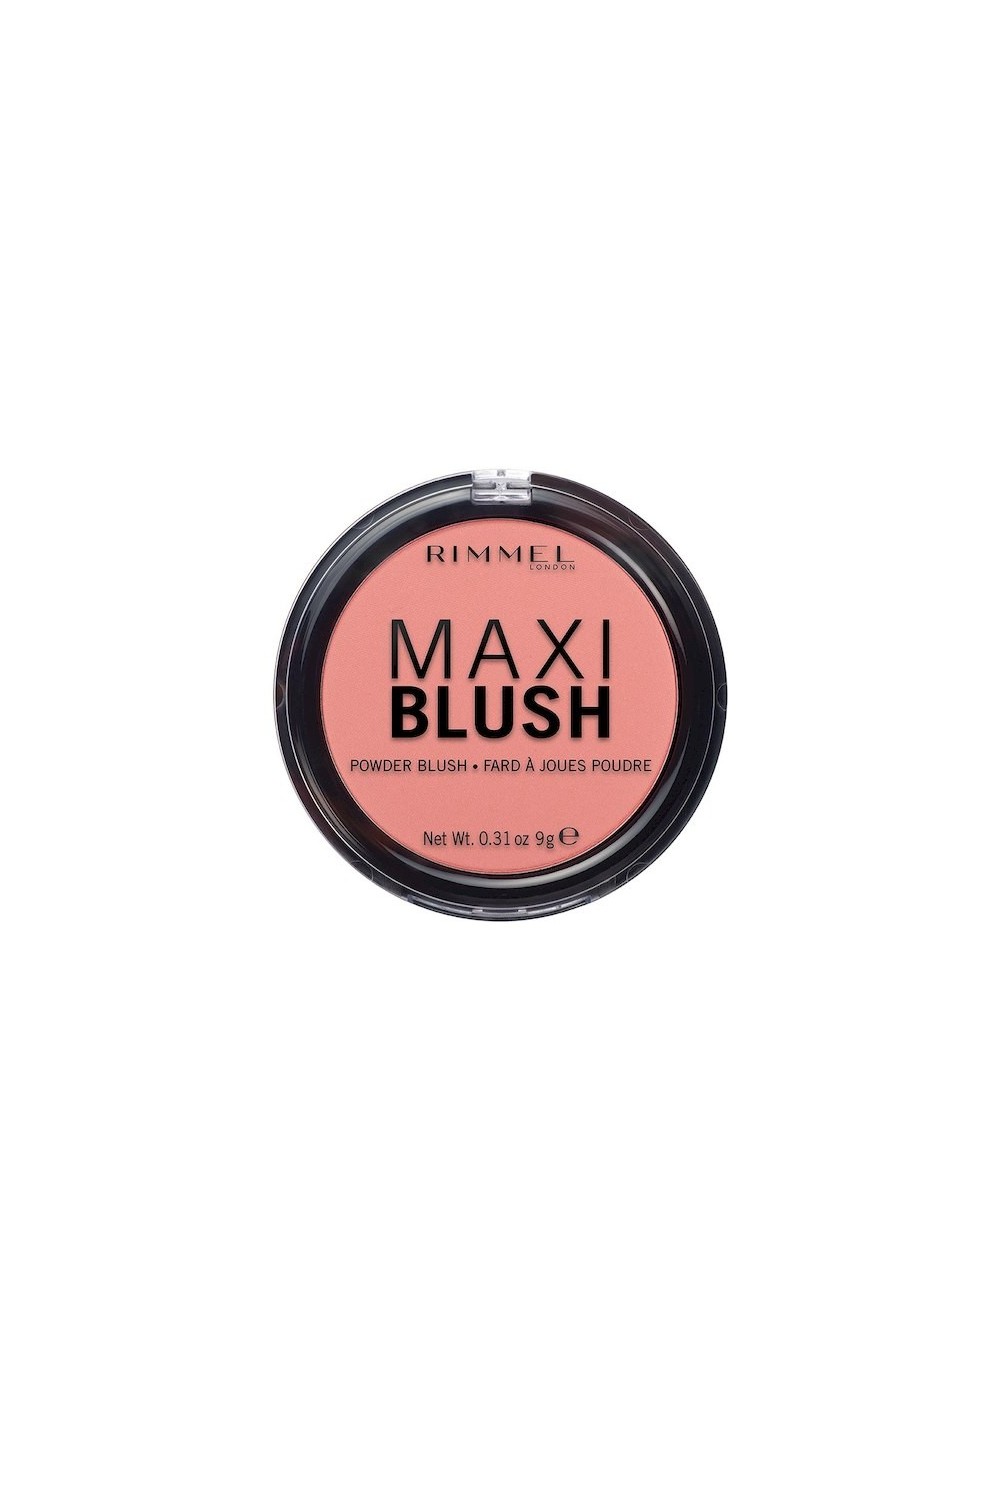 Rimmel London Maxi Blush Powder Blush 006 Exposed 9g